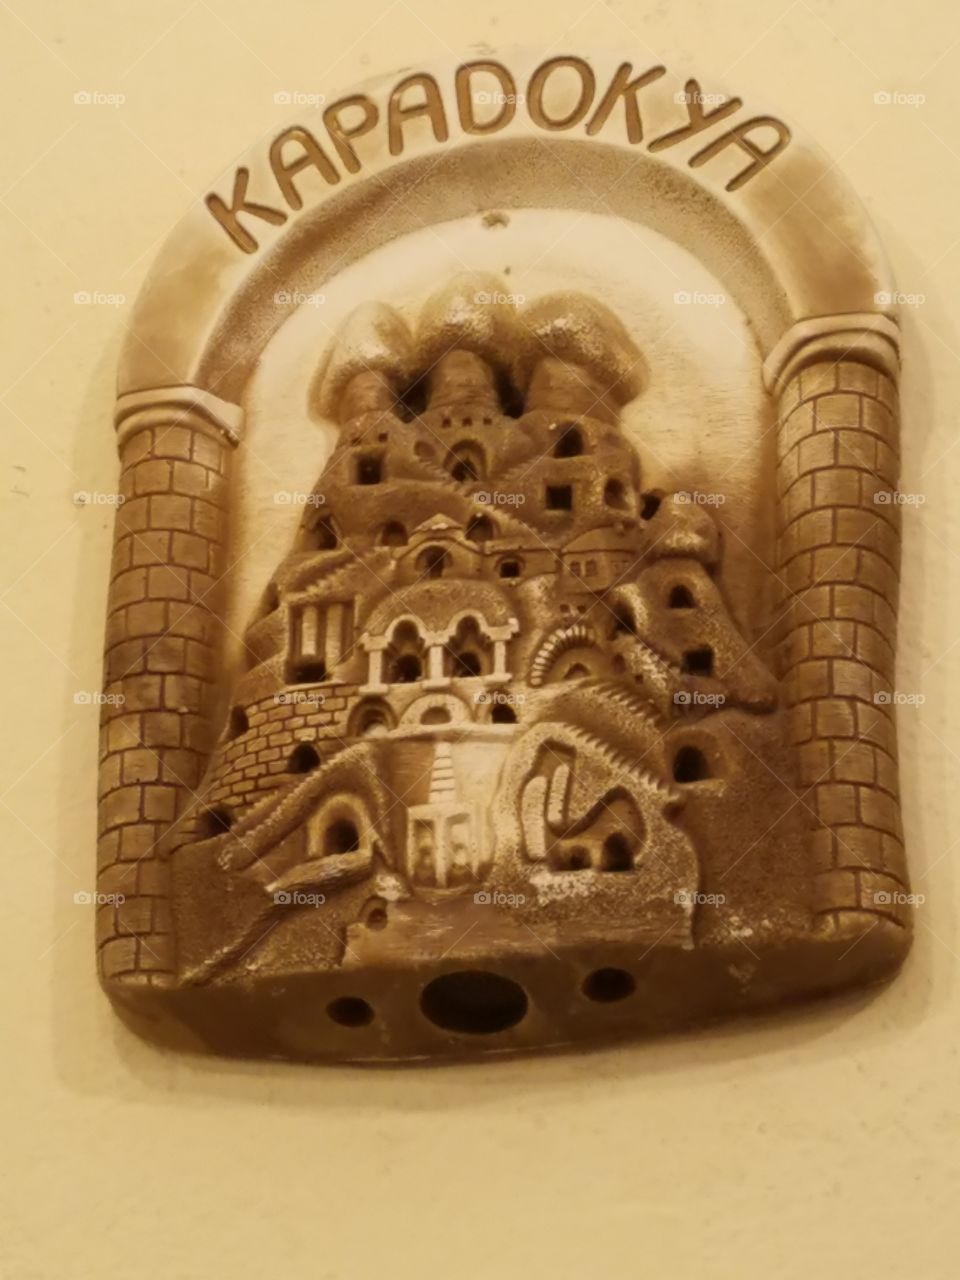 Cappadocia or Kapadokya pottery artwork